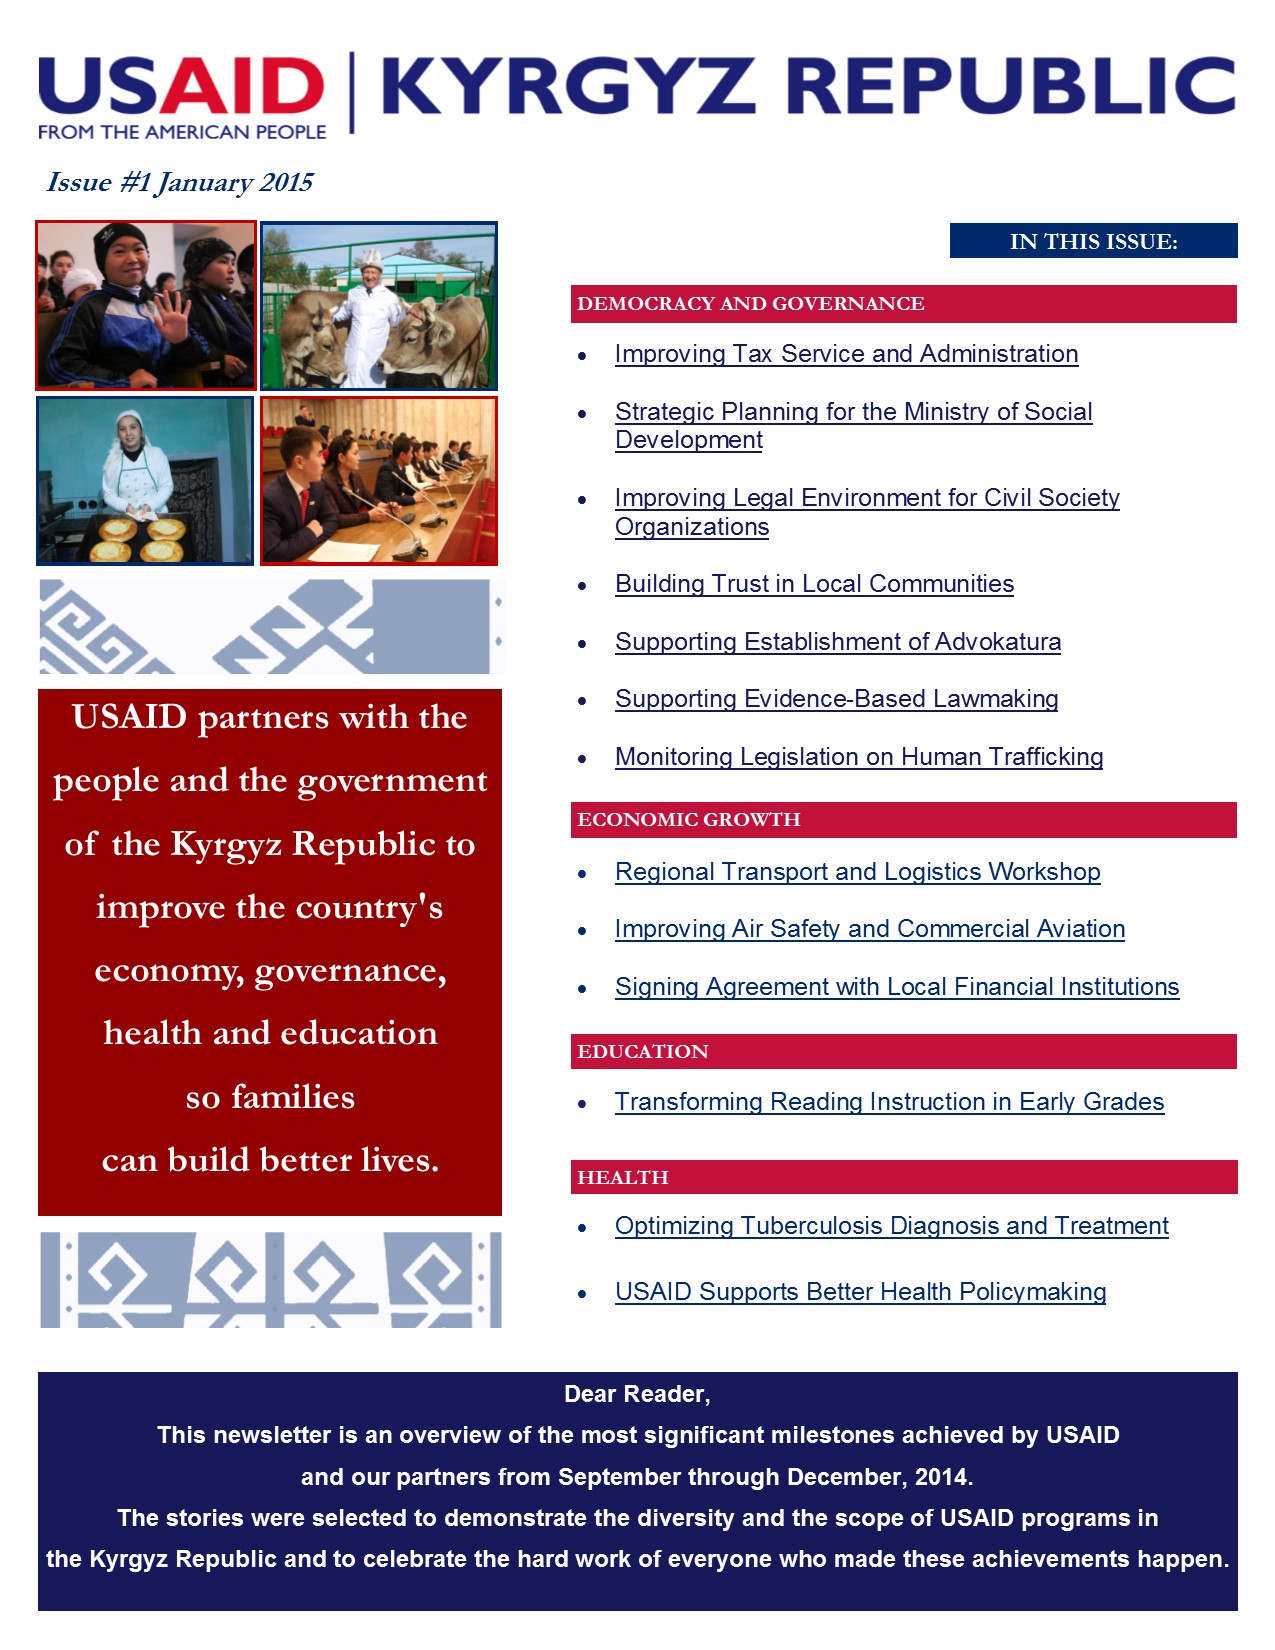 USAID Kyrgyz Republic Quarterly Newsletter Issue #1